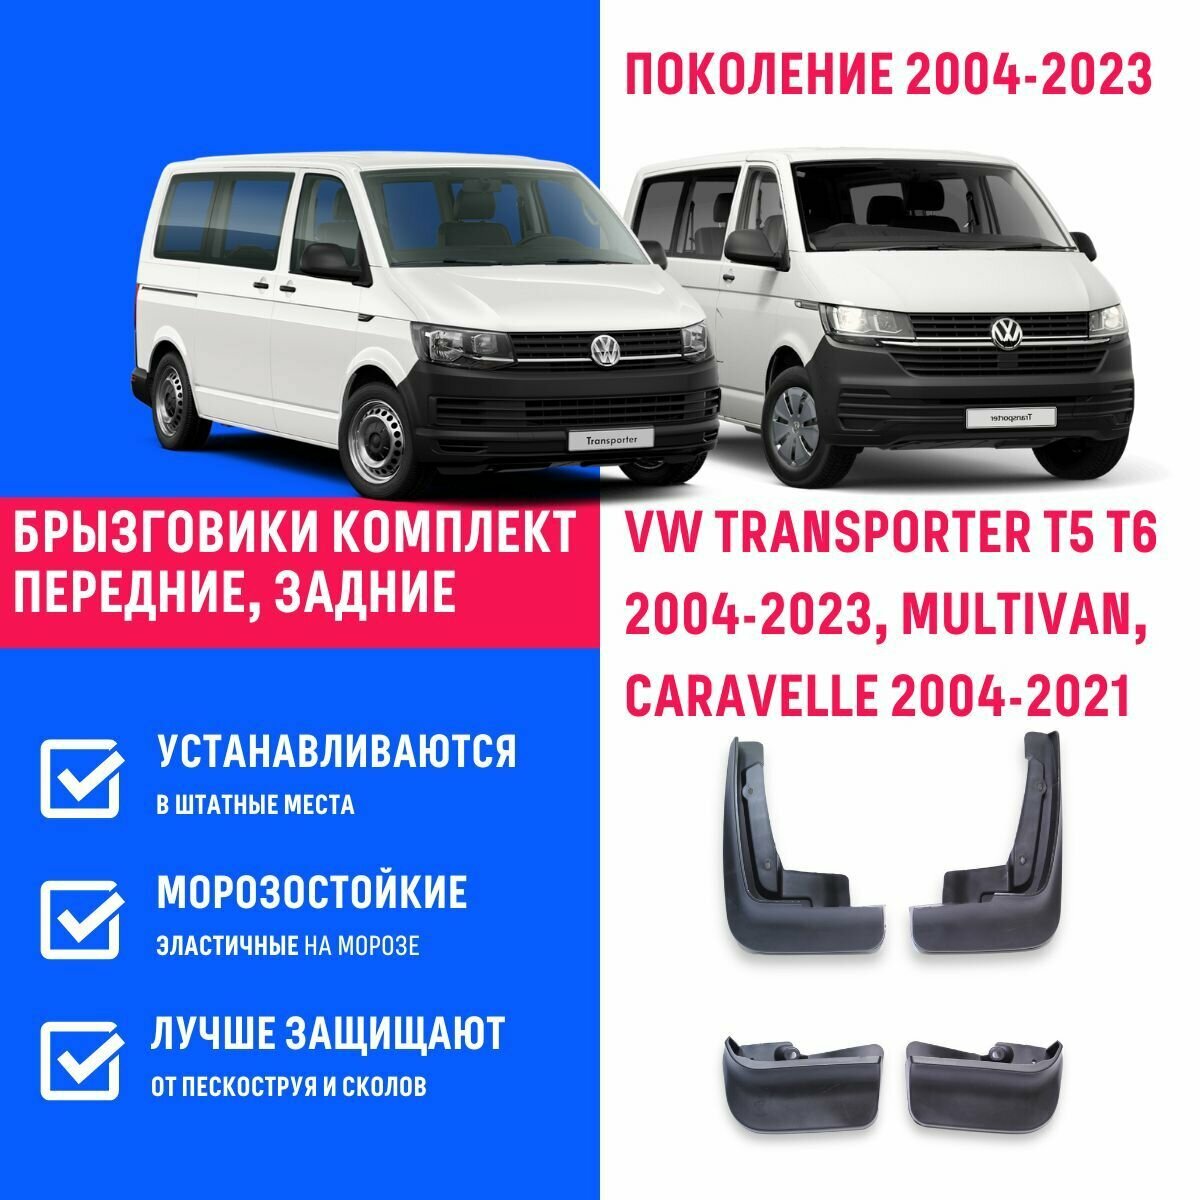 Брызговики VW TRANSPORTER T5 T6 2004-2023, MULTIVAN, CARAVELLE поколение 2004-2021